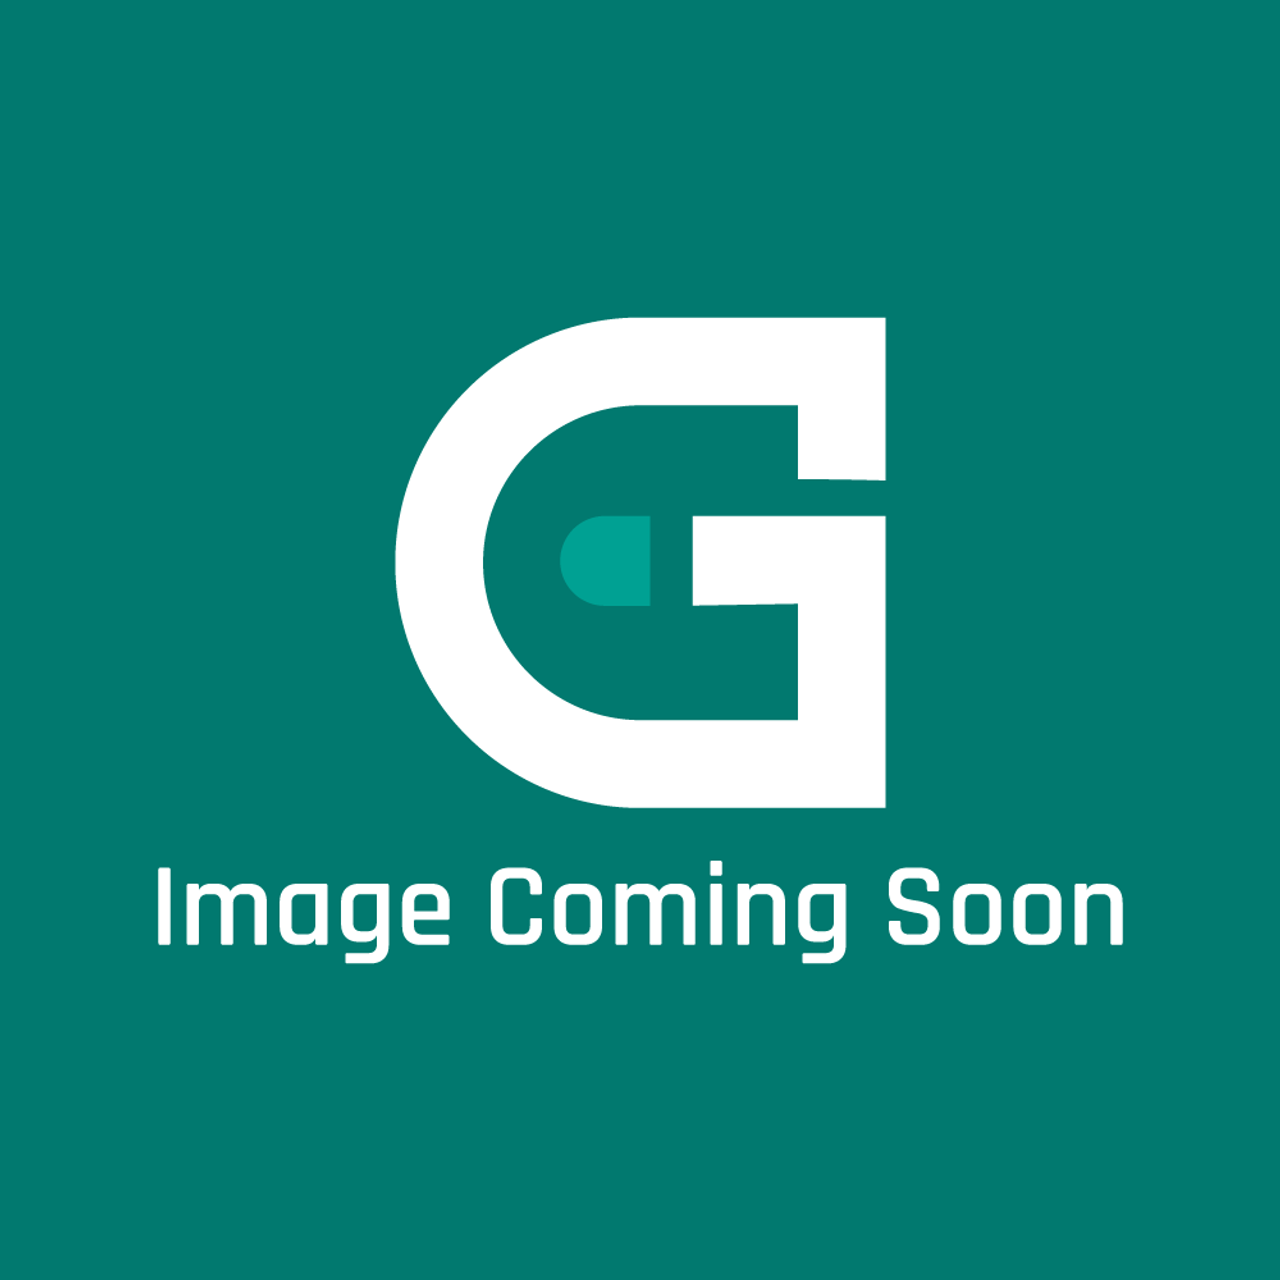 AGA Marvel RS9M997056 - Rayburn Royal Hob C/W Pad - Image Coming Soon!